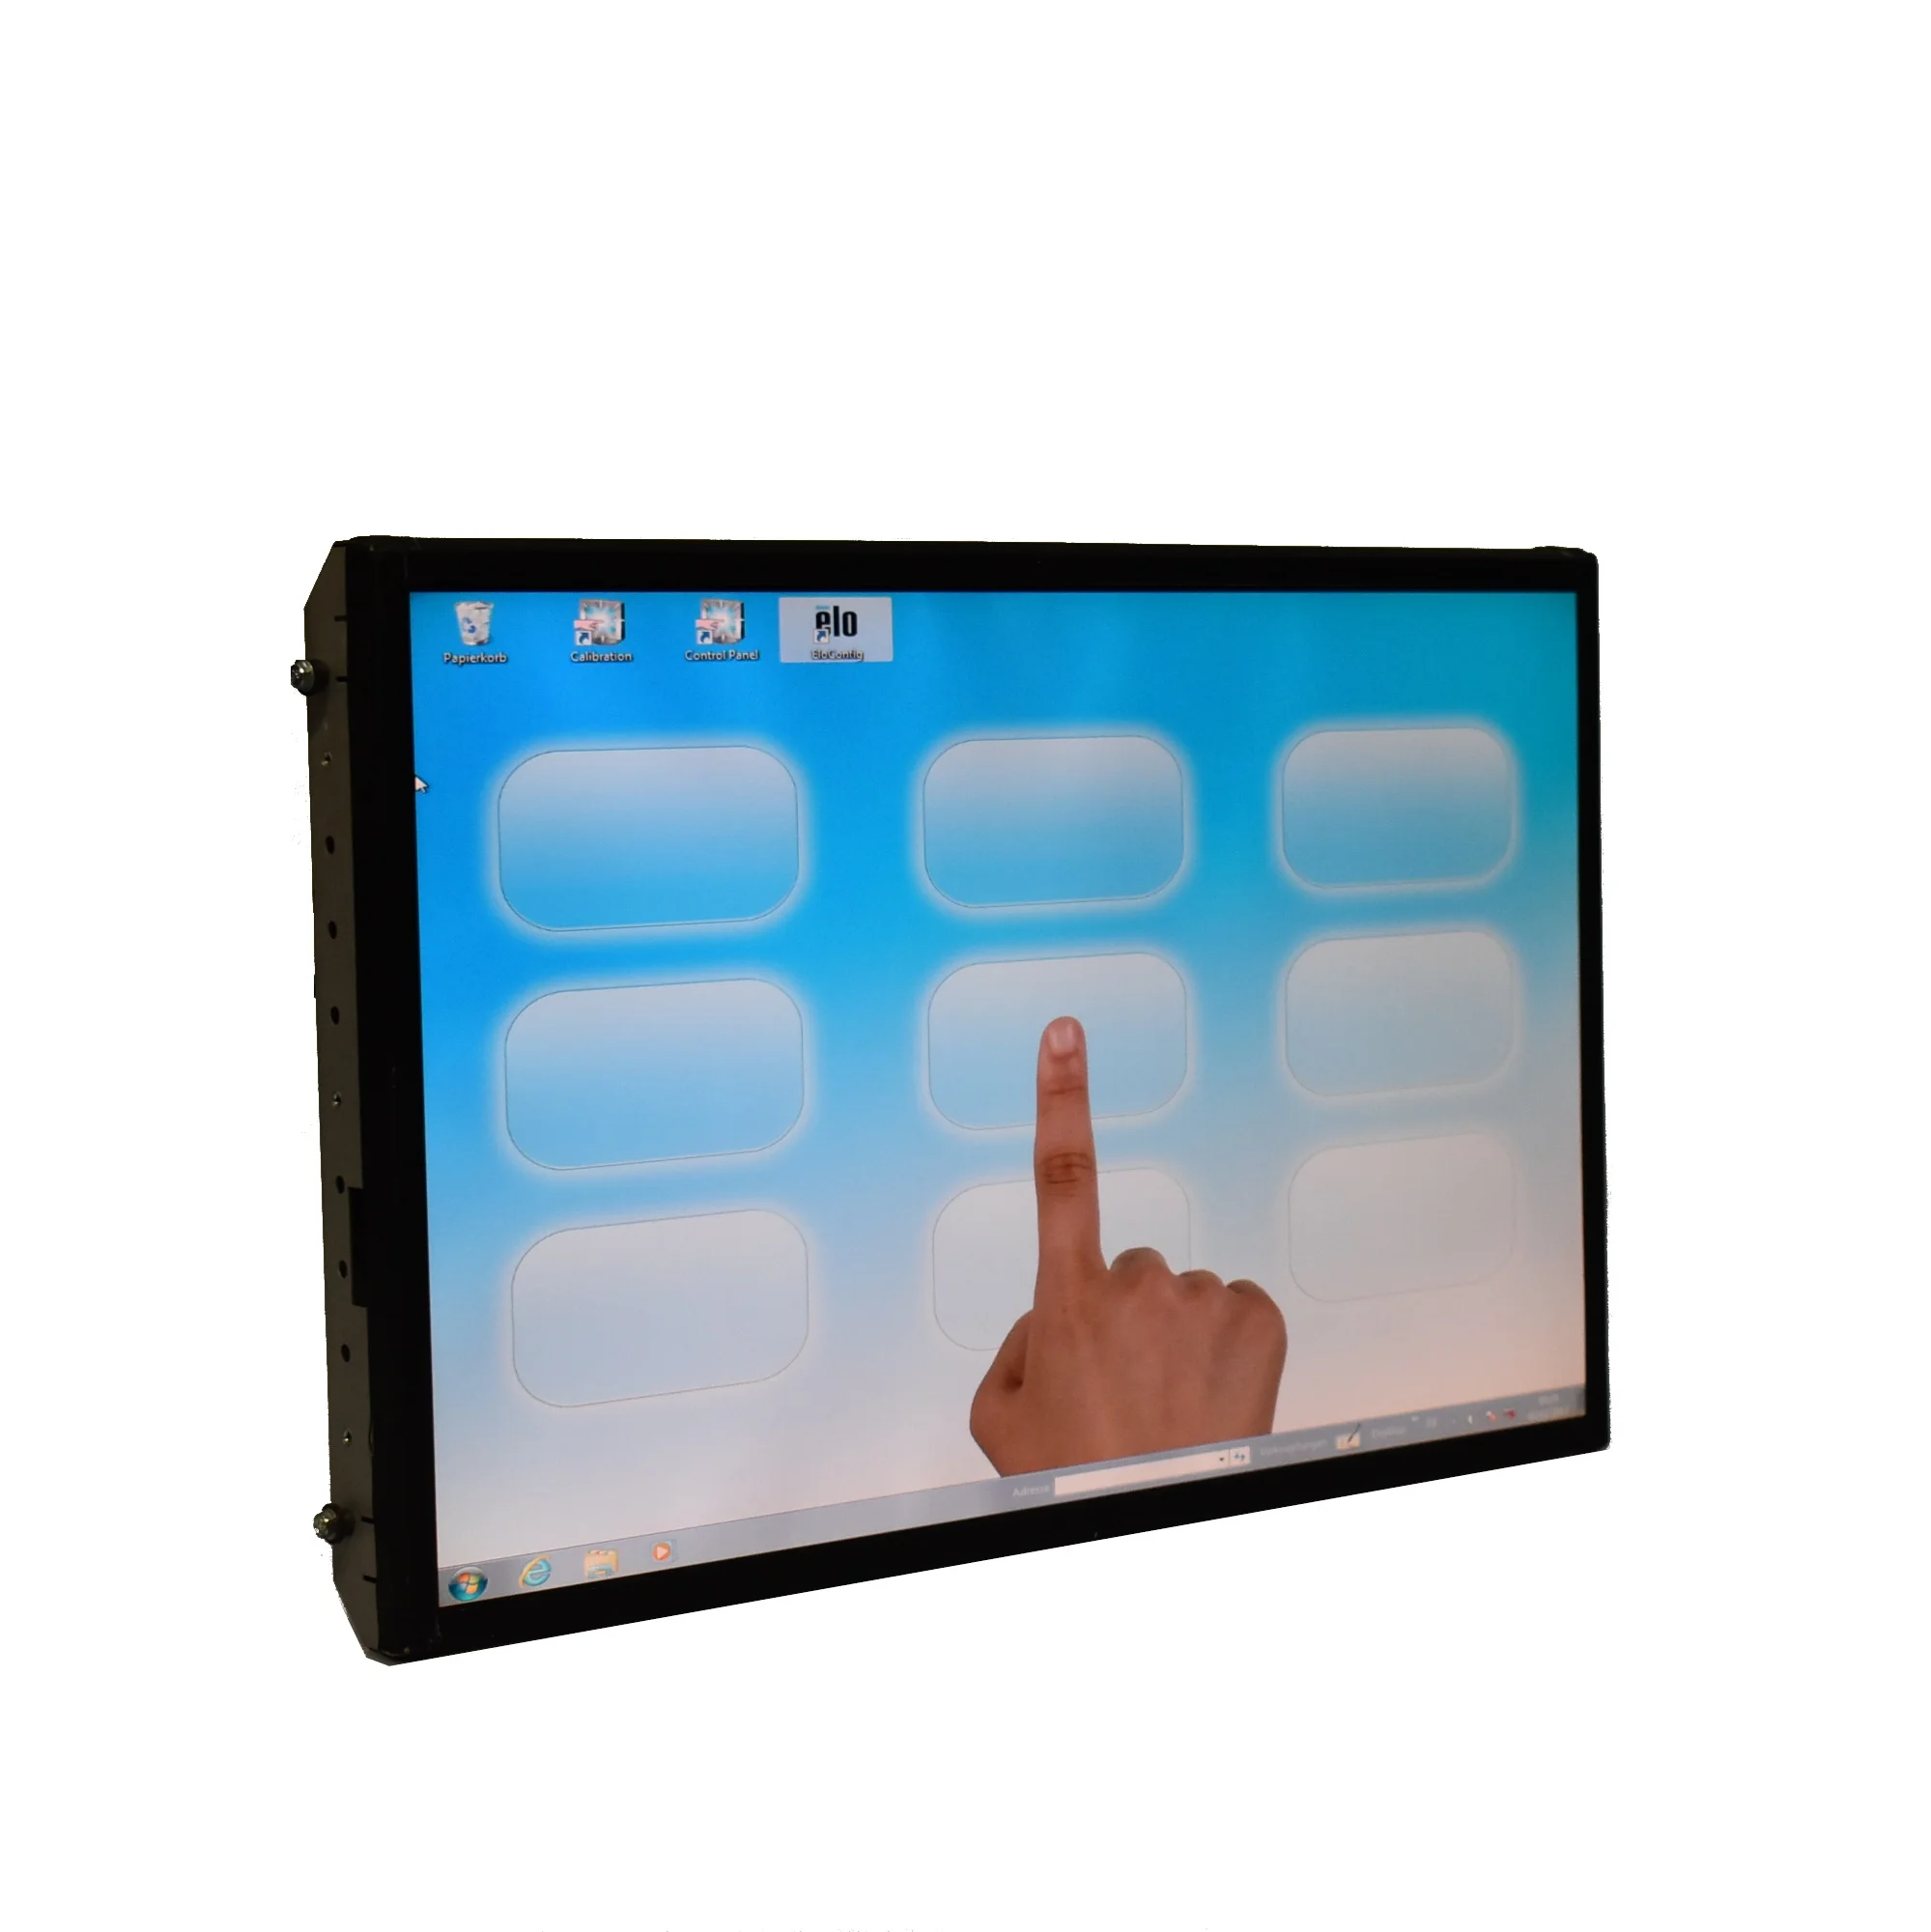 22 "elo Touchscreen Monitor Vga,Metalen Ingesloten Openframe,Stof-proof Touchscreen Buy Industrial Touch Screen Frame Touch Screen Screen Monitor 22 Inch Product on Alibaba.com